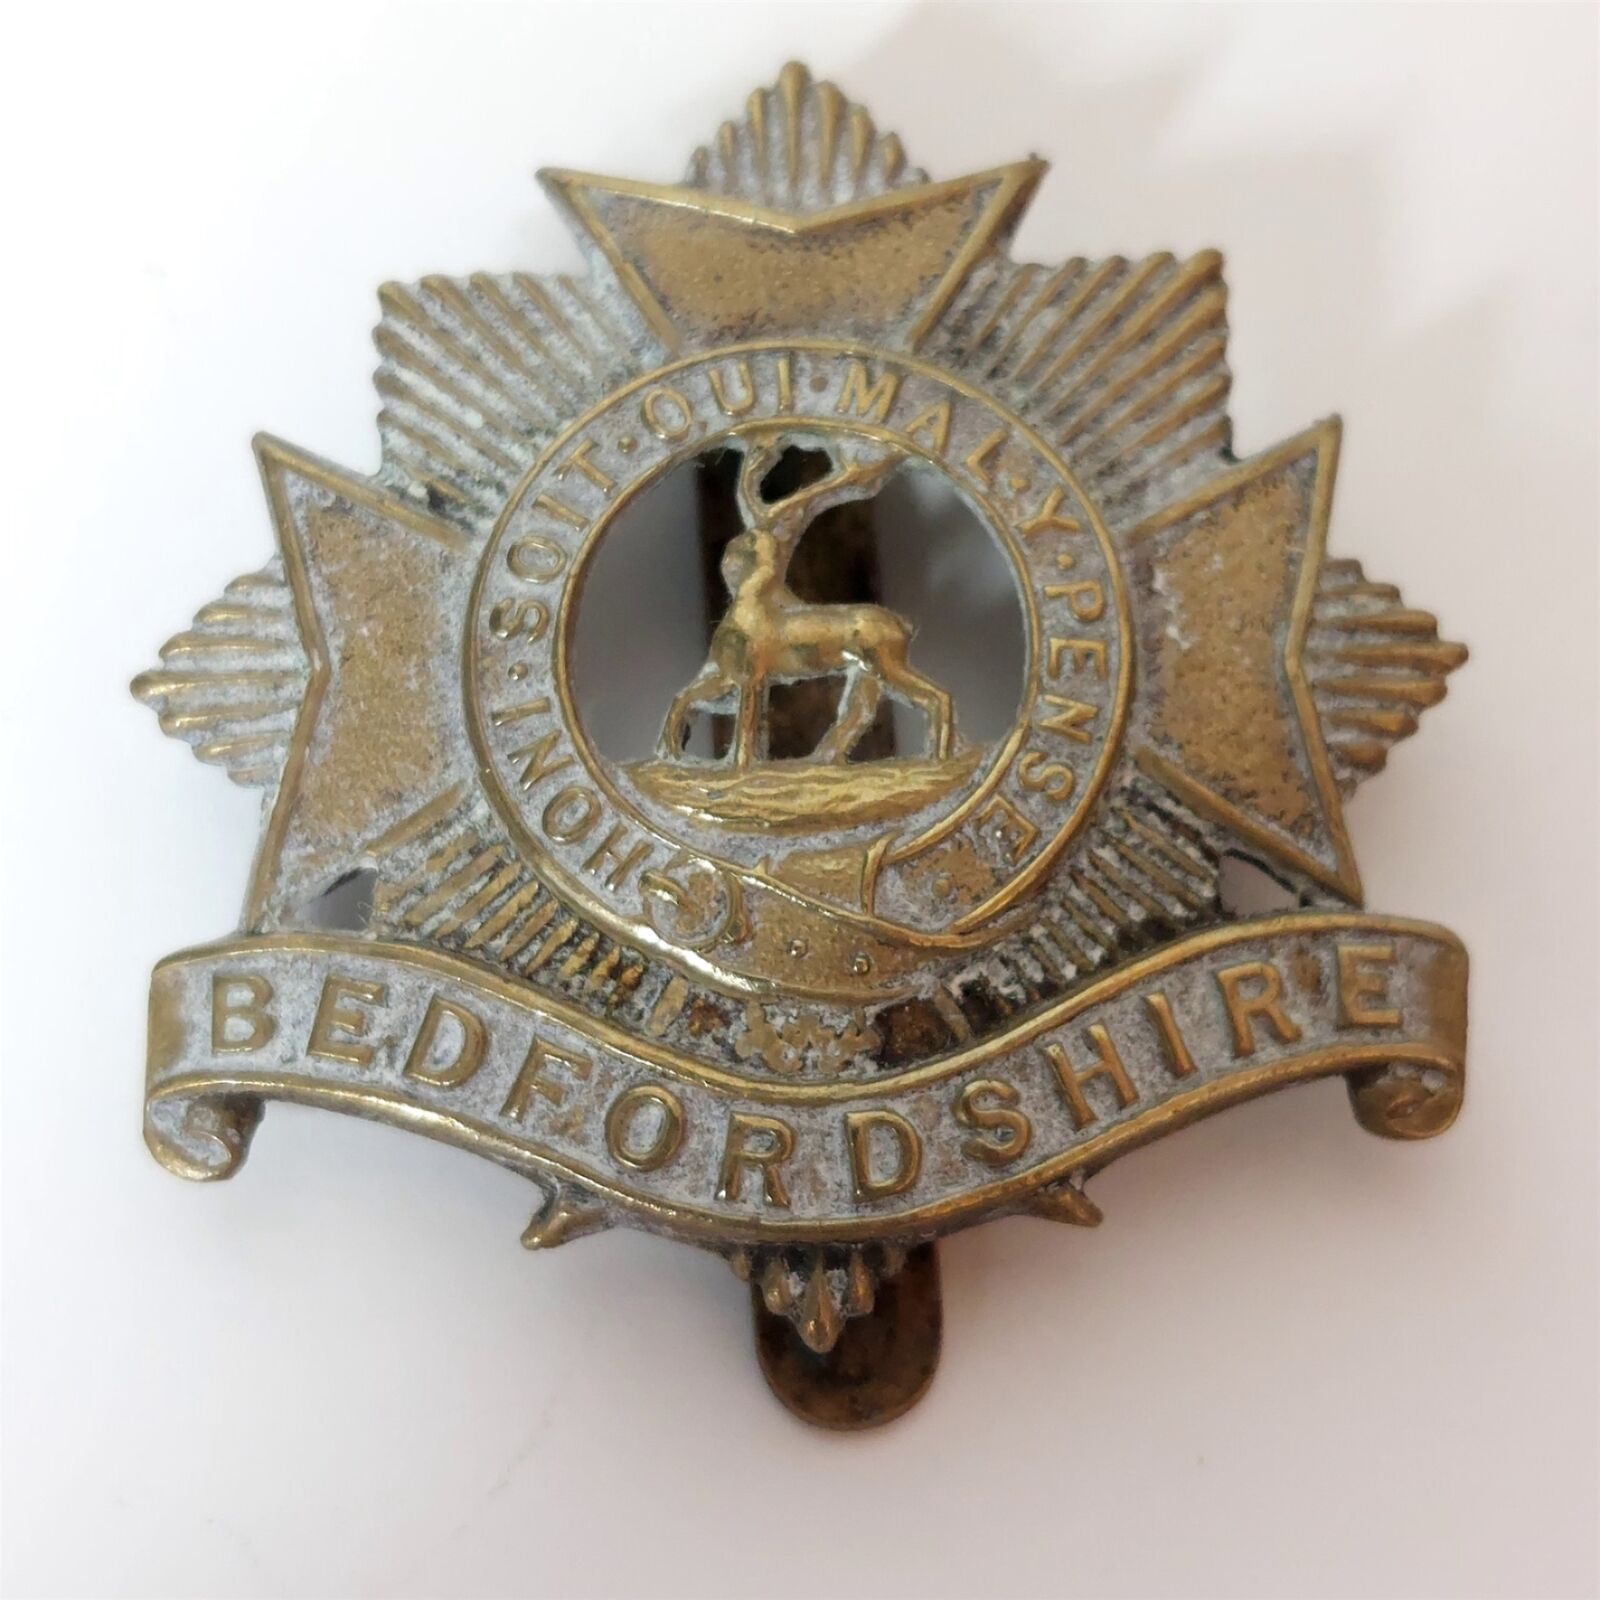 Bedfordshire Regiment Cap Badge Brass Slider Voided 41mm